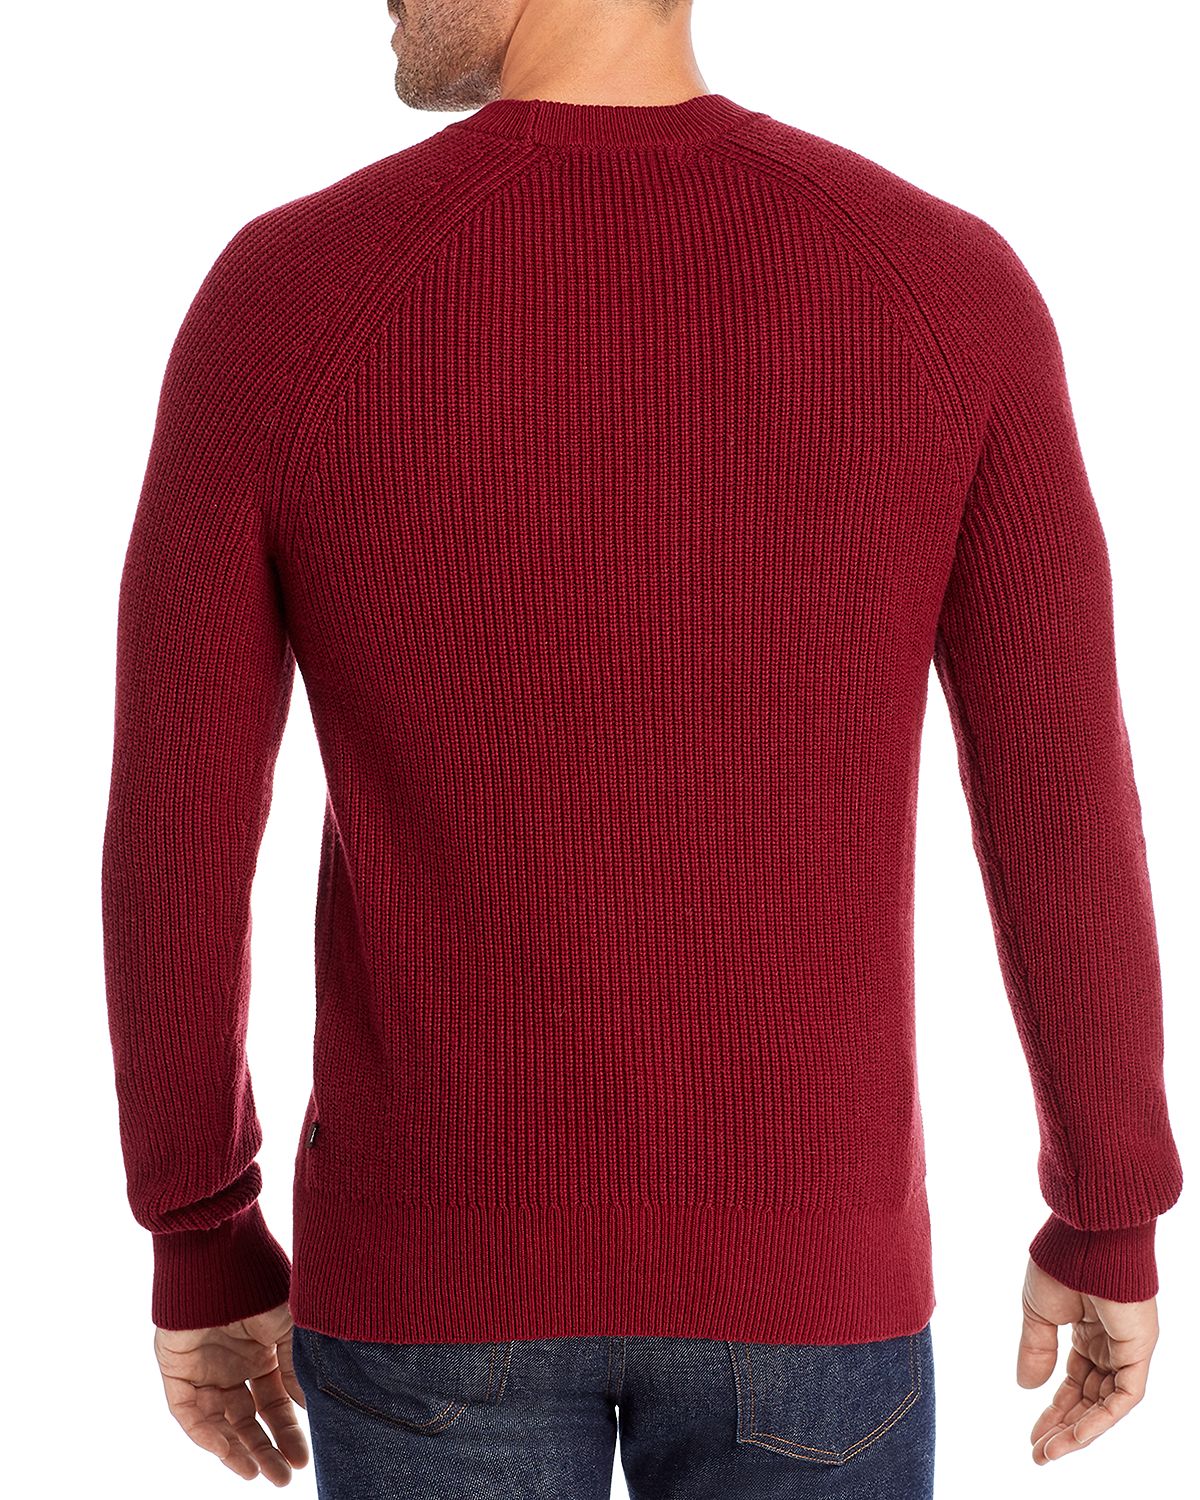 Michael Kors Ribbed Crewneck Sweater Merlot